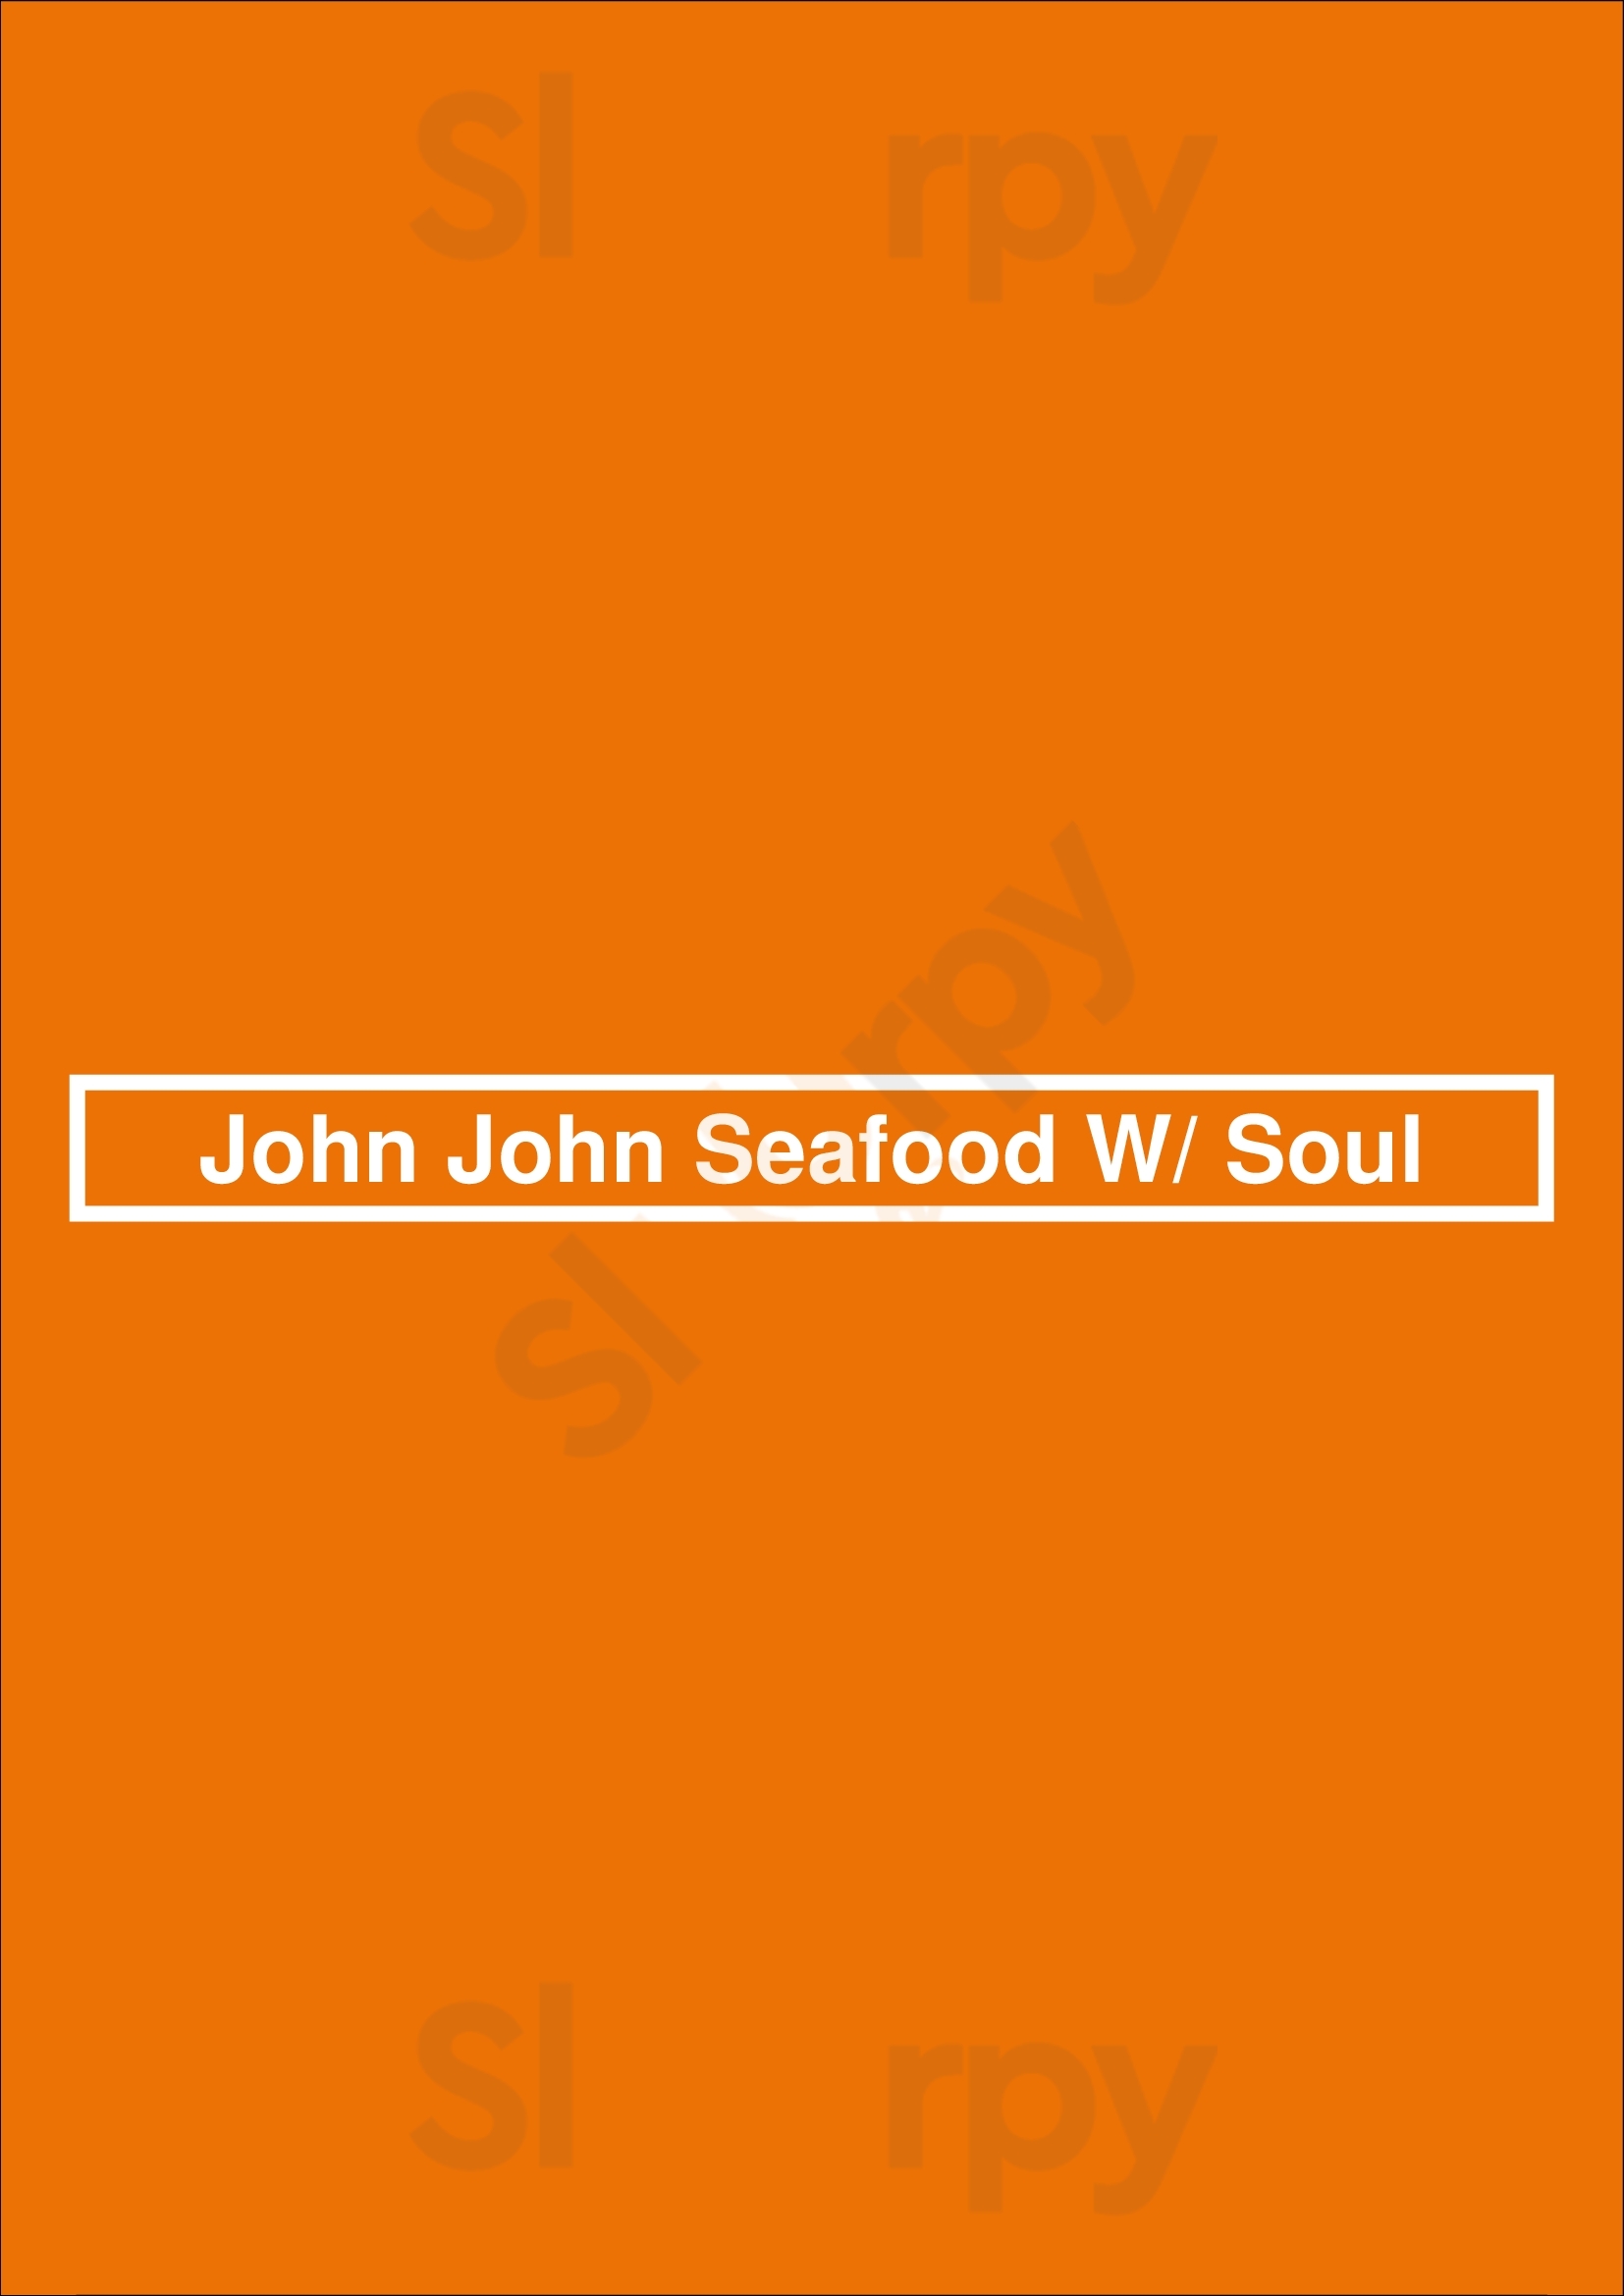 John John Seafood W/ Soul Cleveland Menu - 1